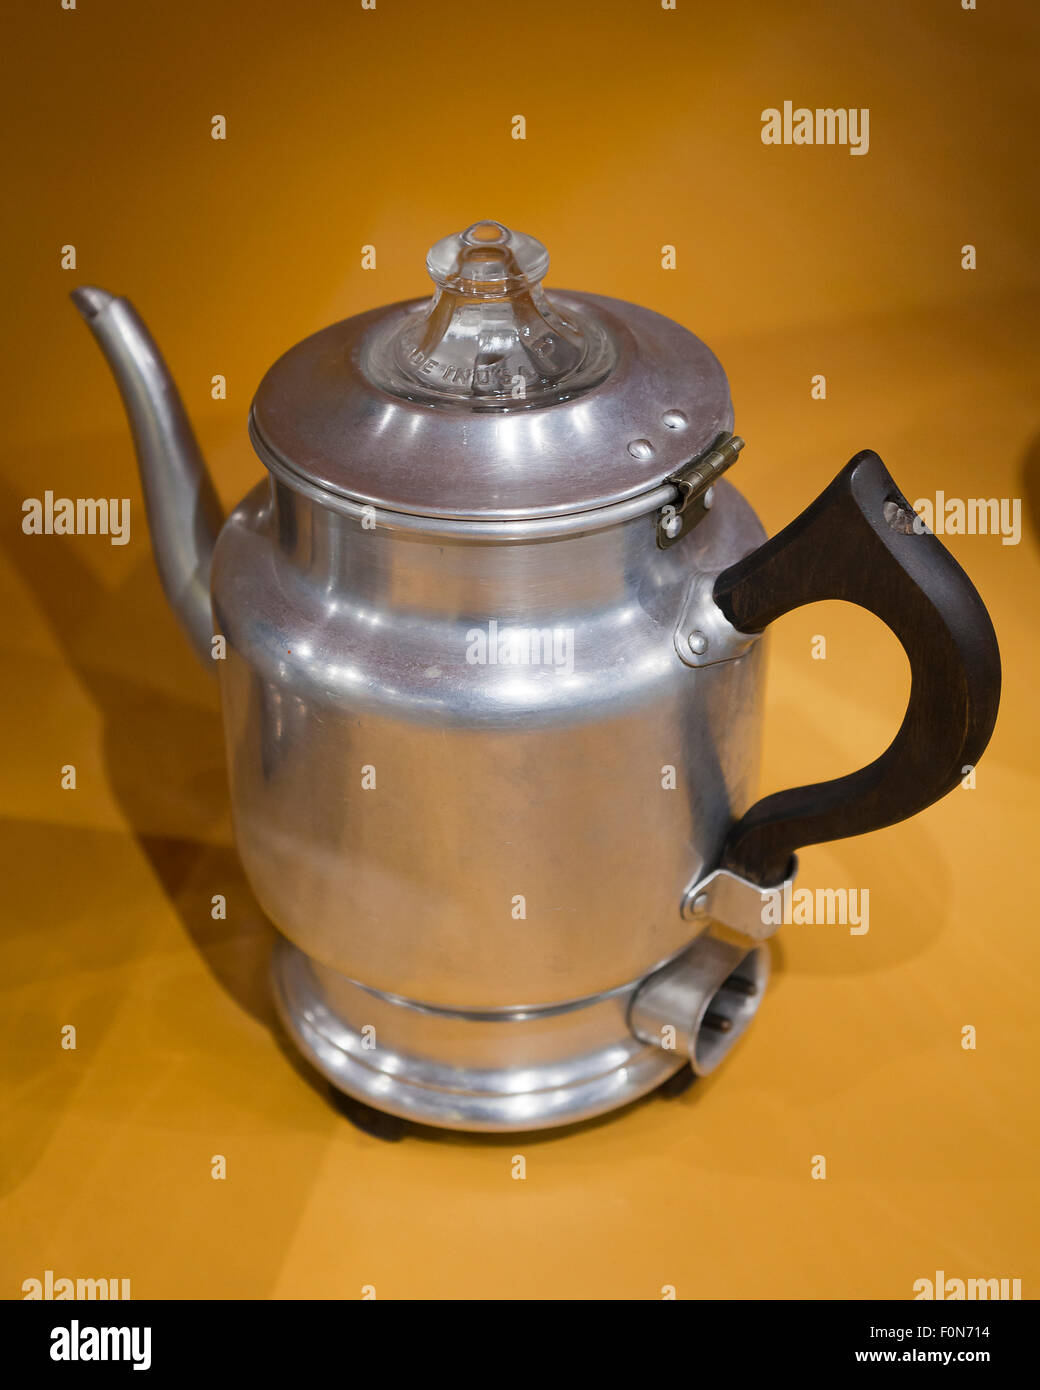 https://c8.alamy.com/comp/F0N714/vintage-coffee-percolator-circa-1920s-F0N714.jpg